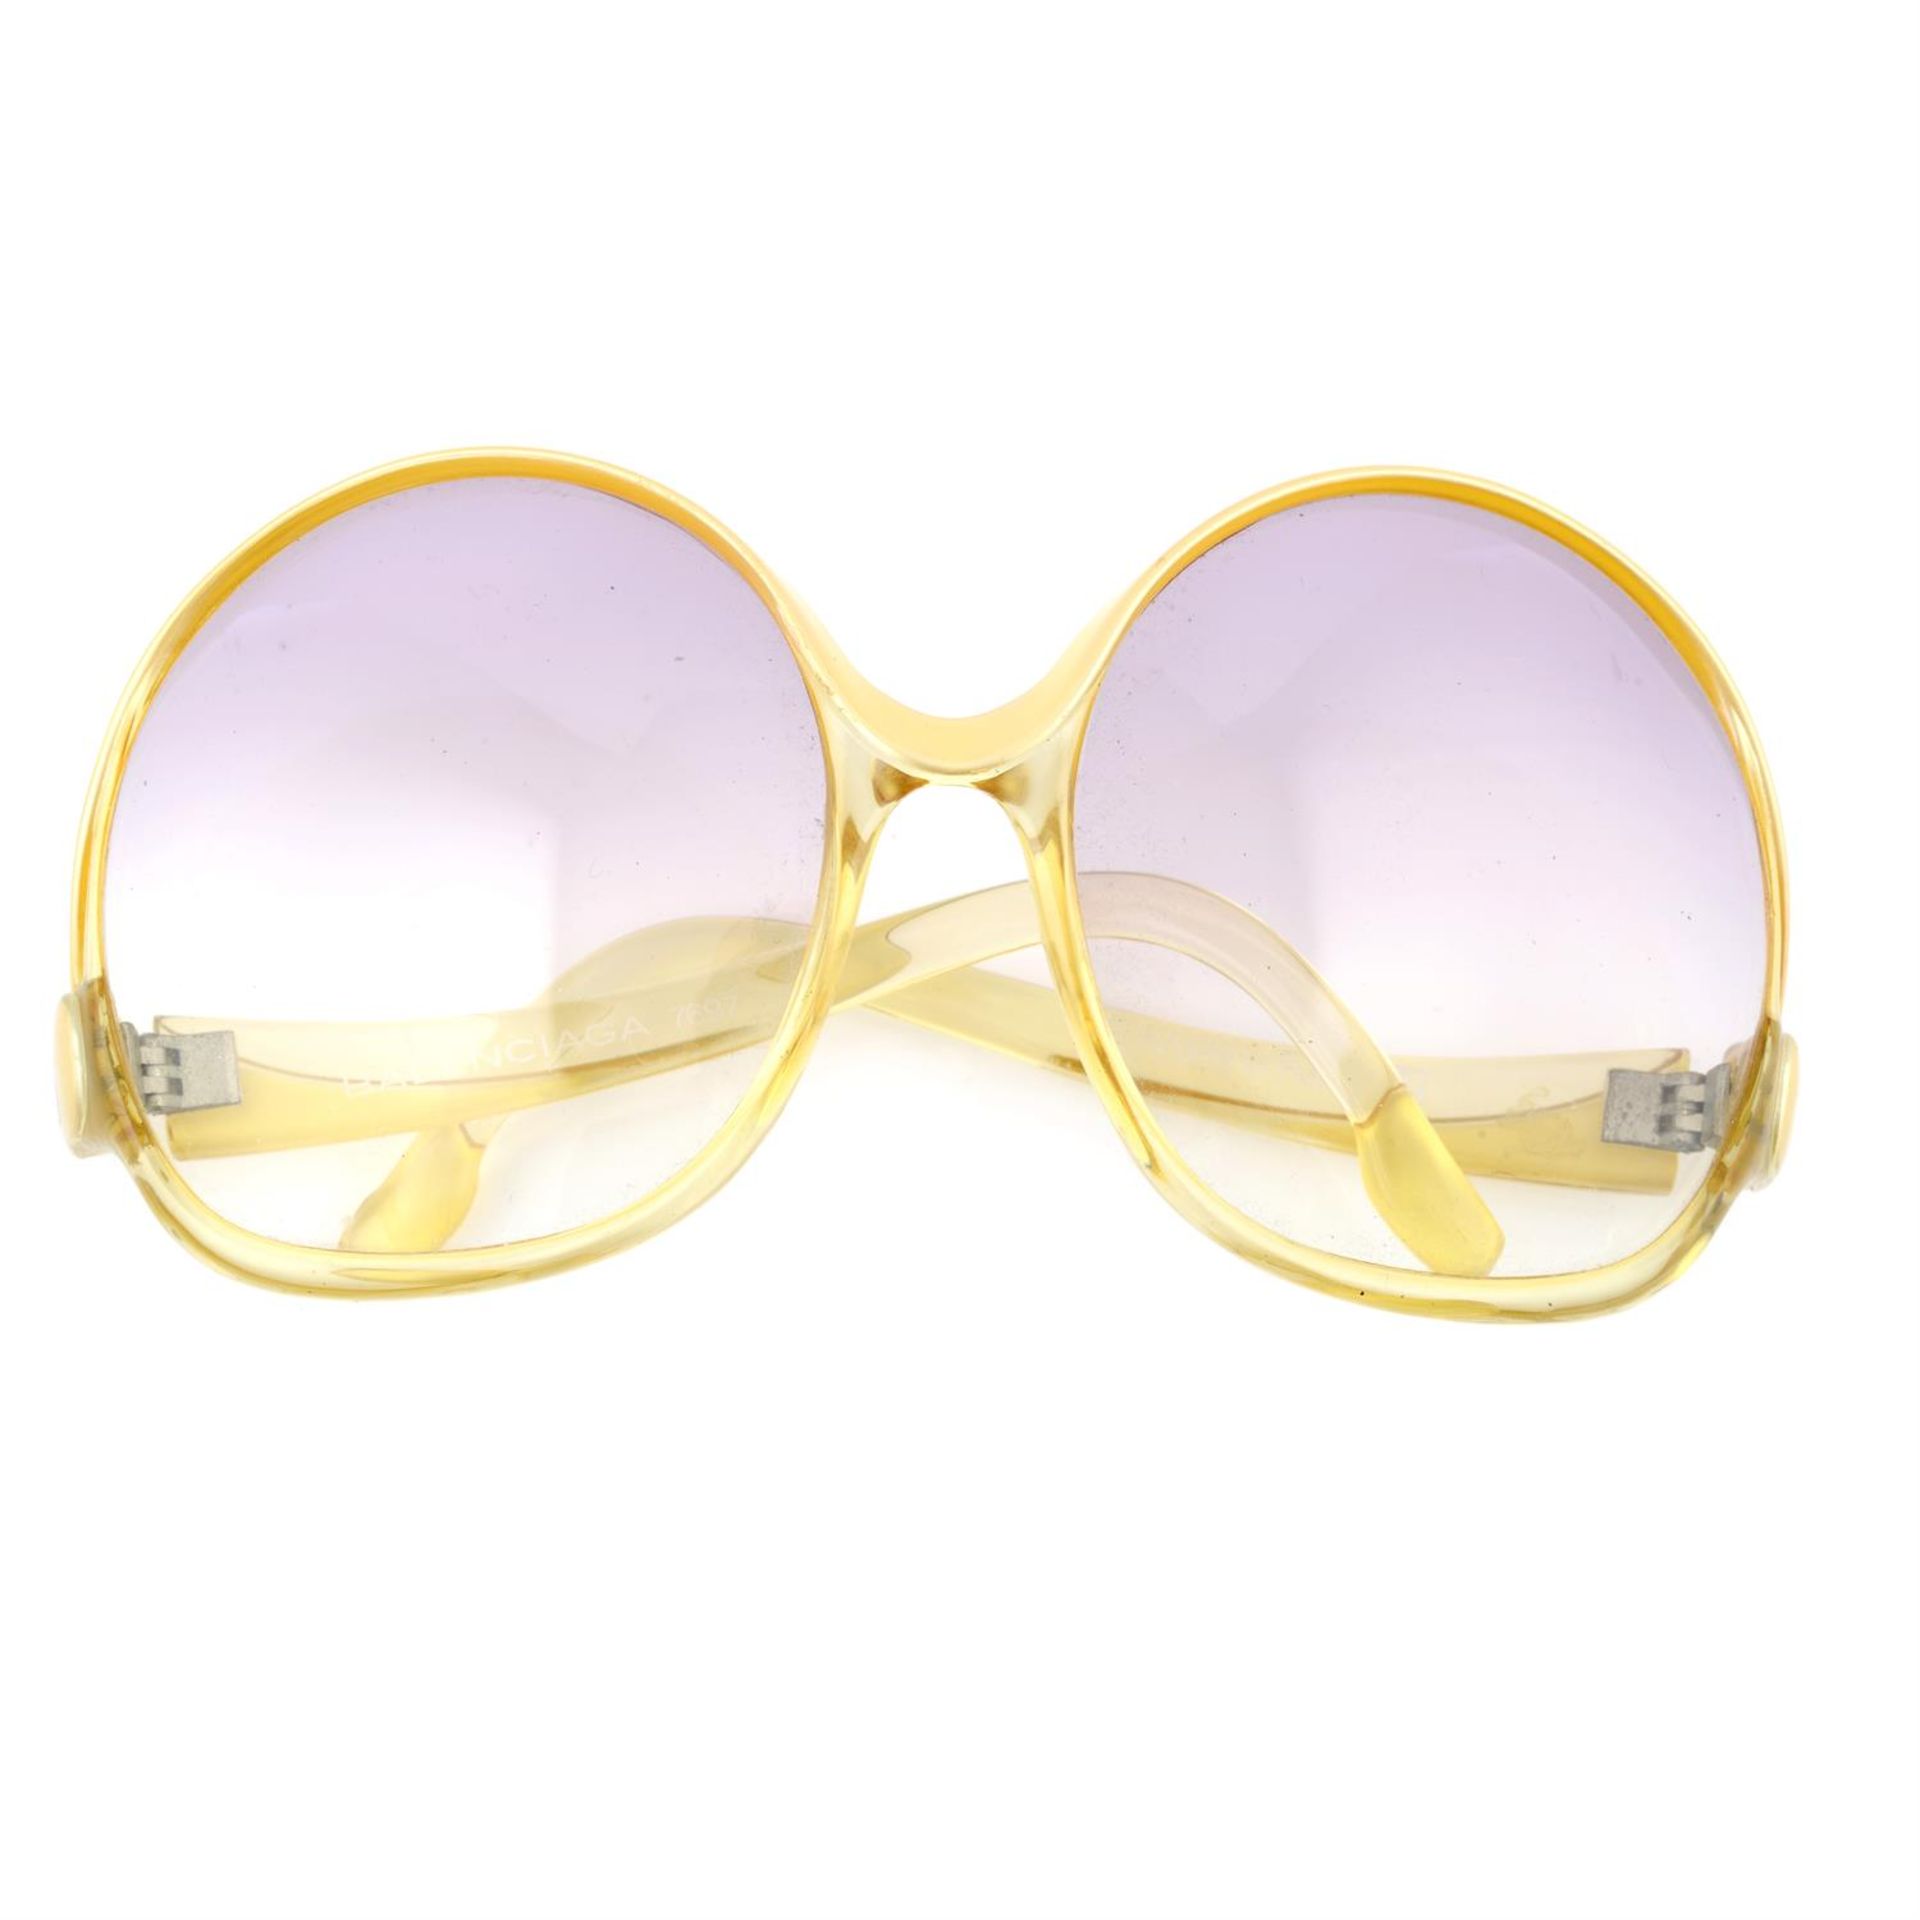 BALENCIAGA - a pair of sunglasses.